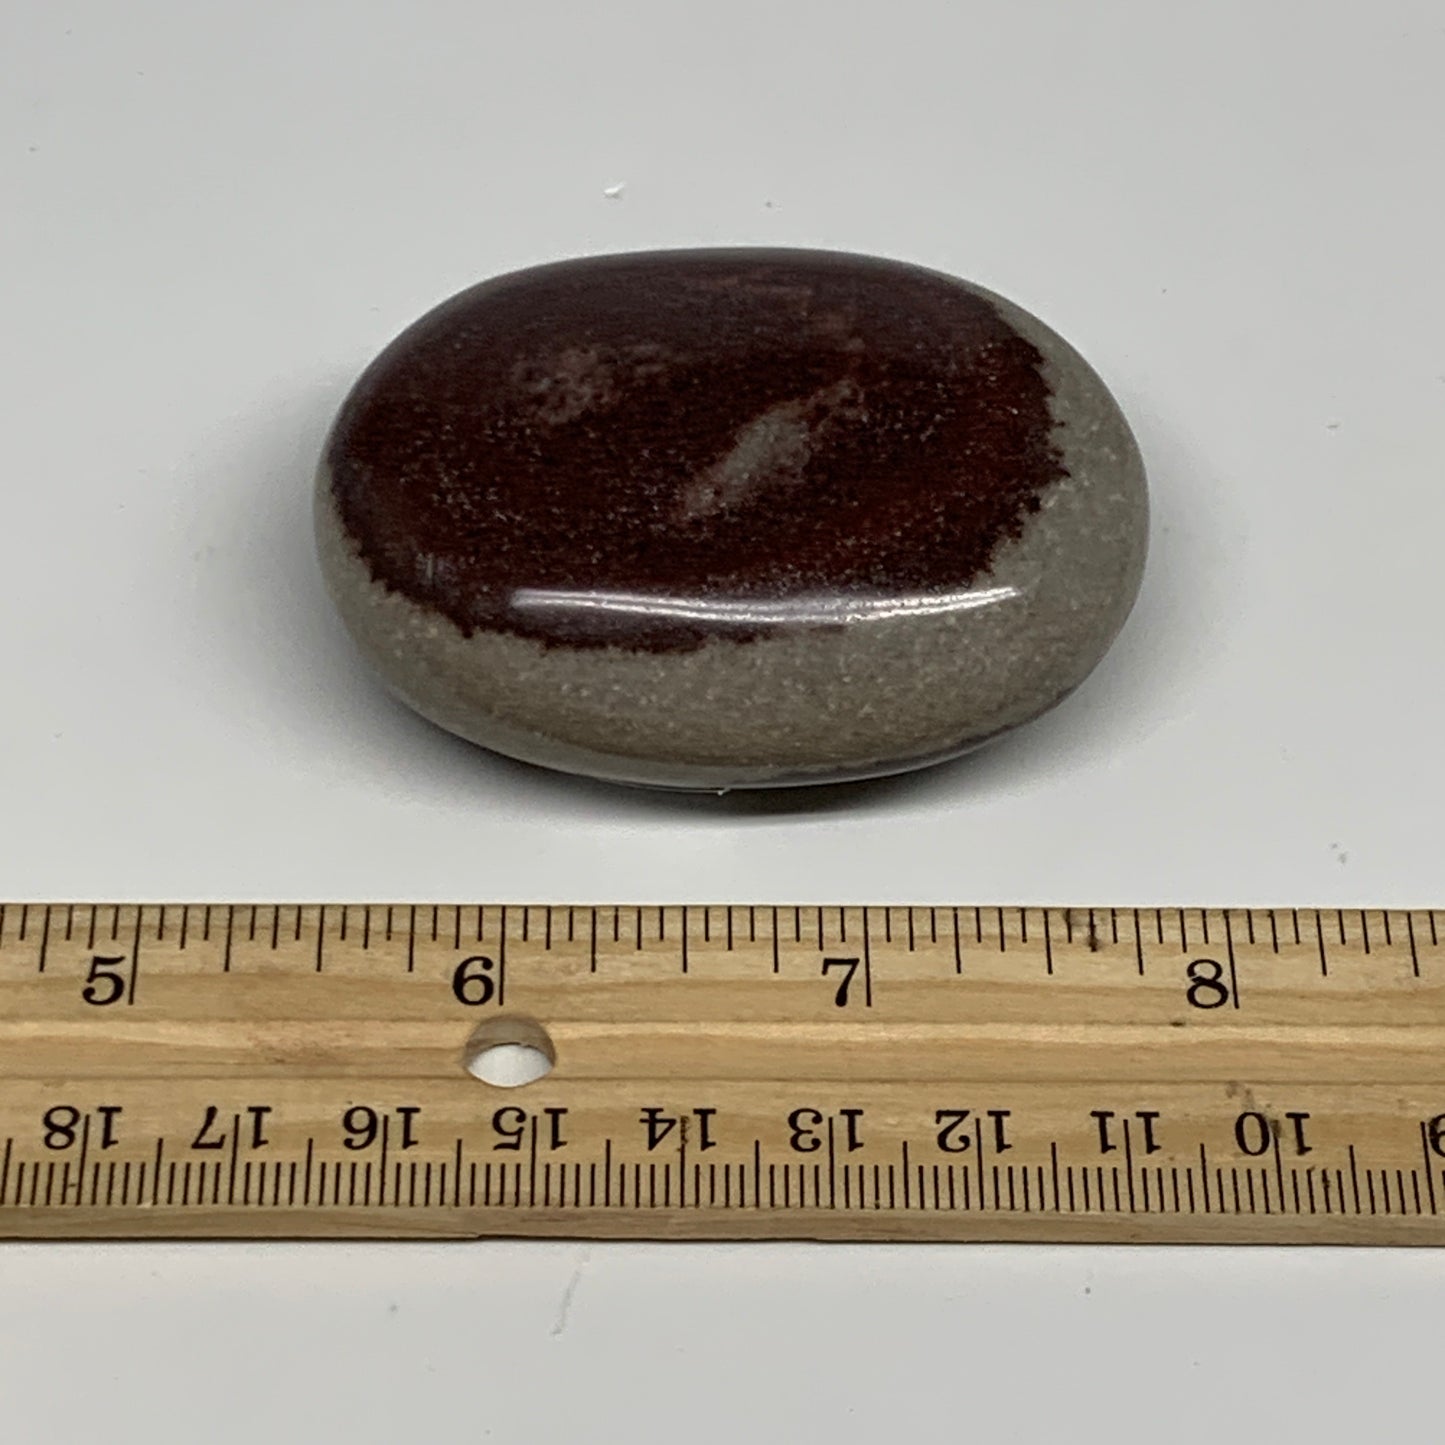 102.1g, 2.4"x1.8"x0.9", Narmada Shiva Lingam Palm-Stone Polished, B29364